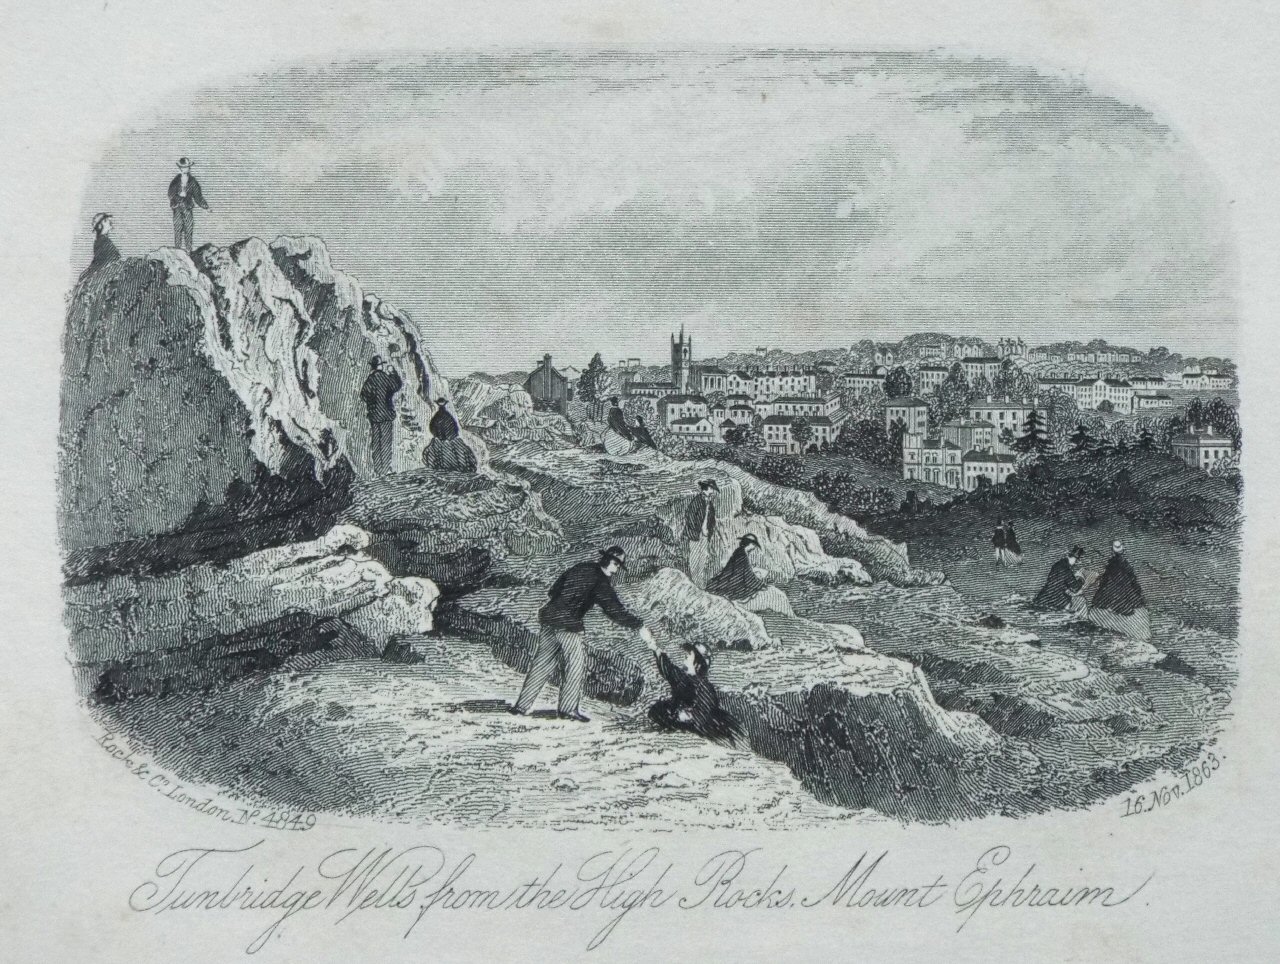 Steel Vignette - Tunbridge Wells, from the High Rocks, Mount Ephraim. - Rock